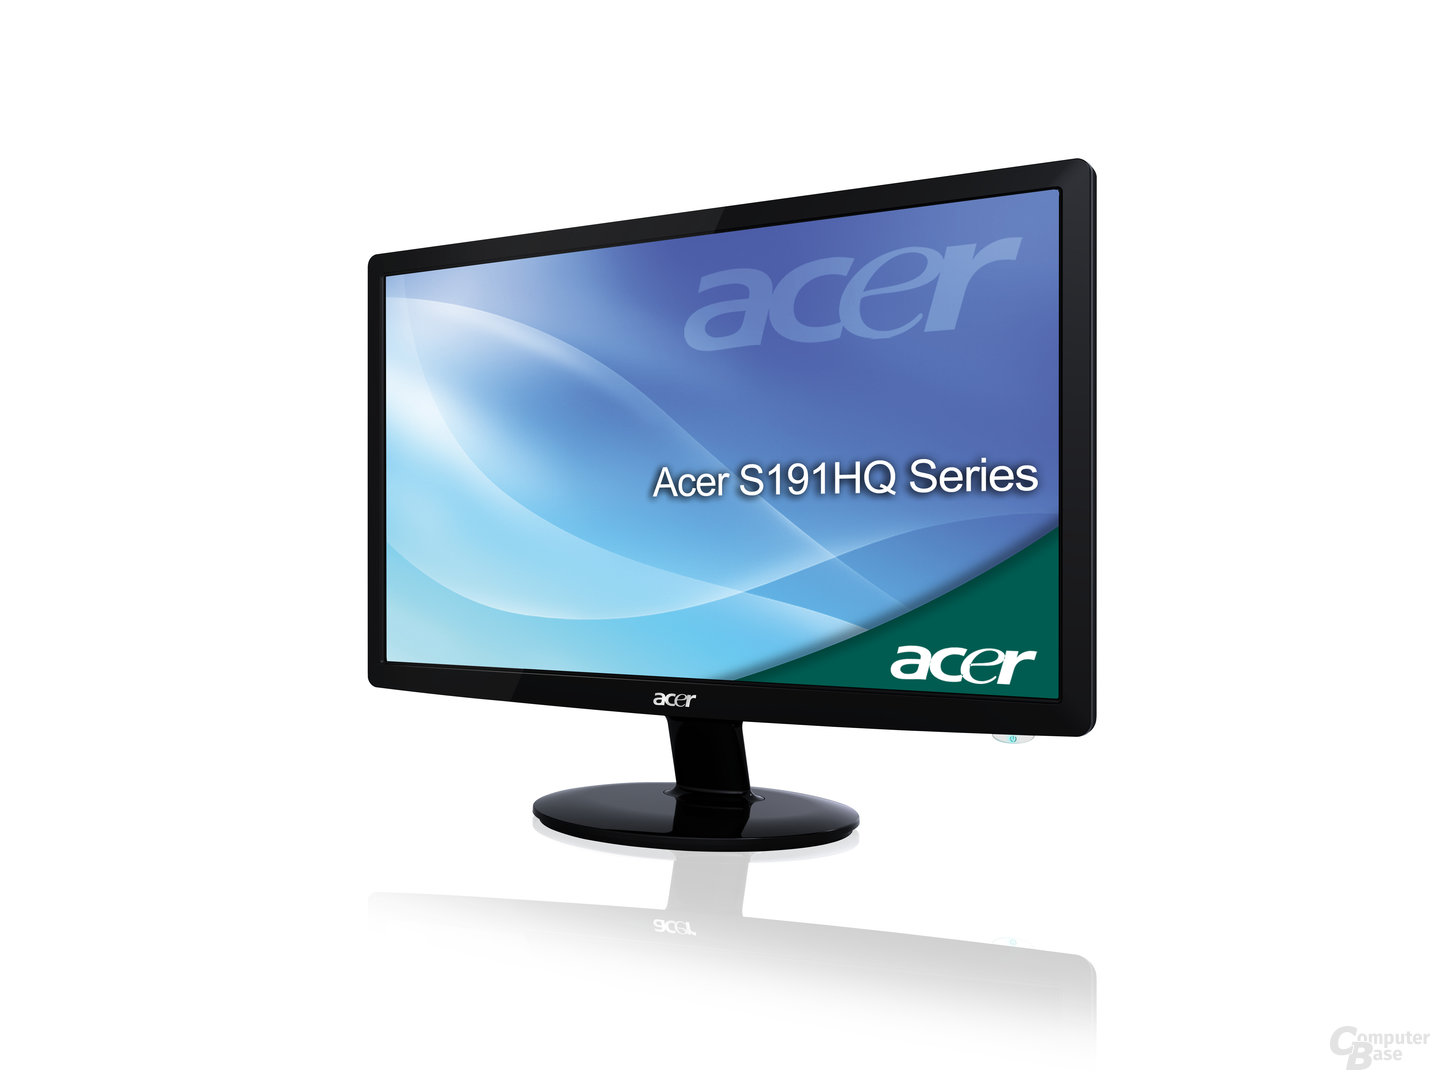 Acer S191HQ